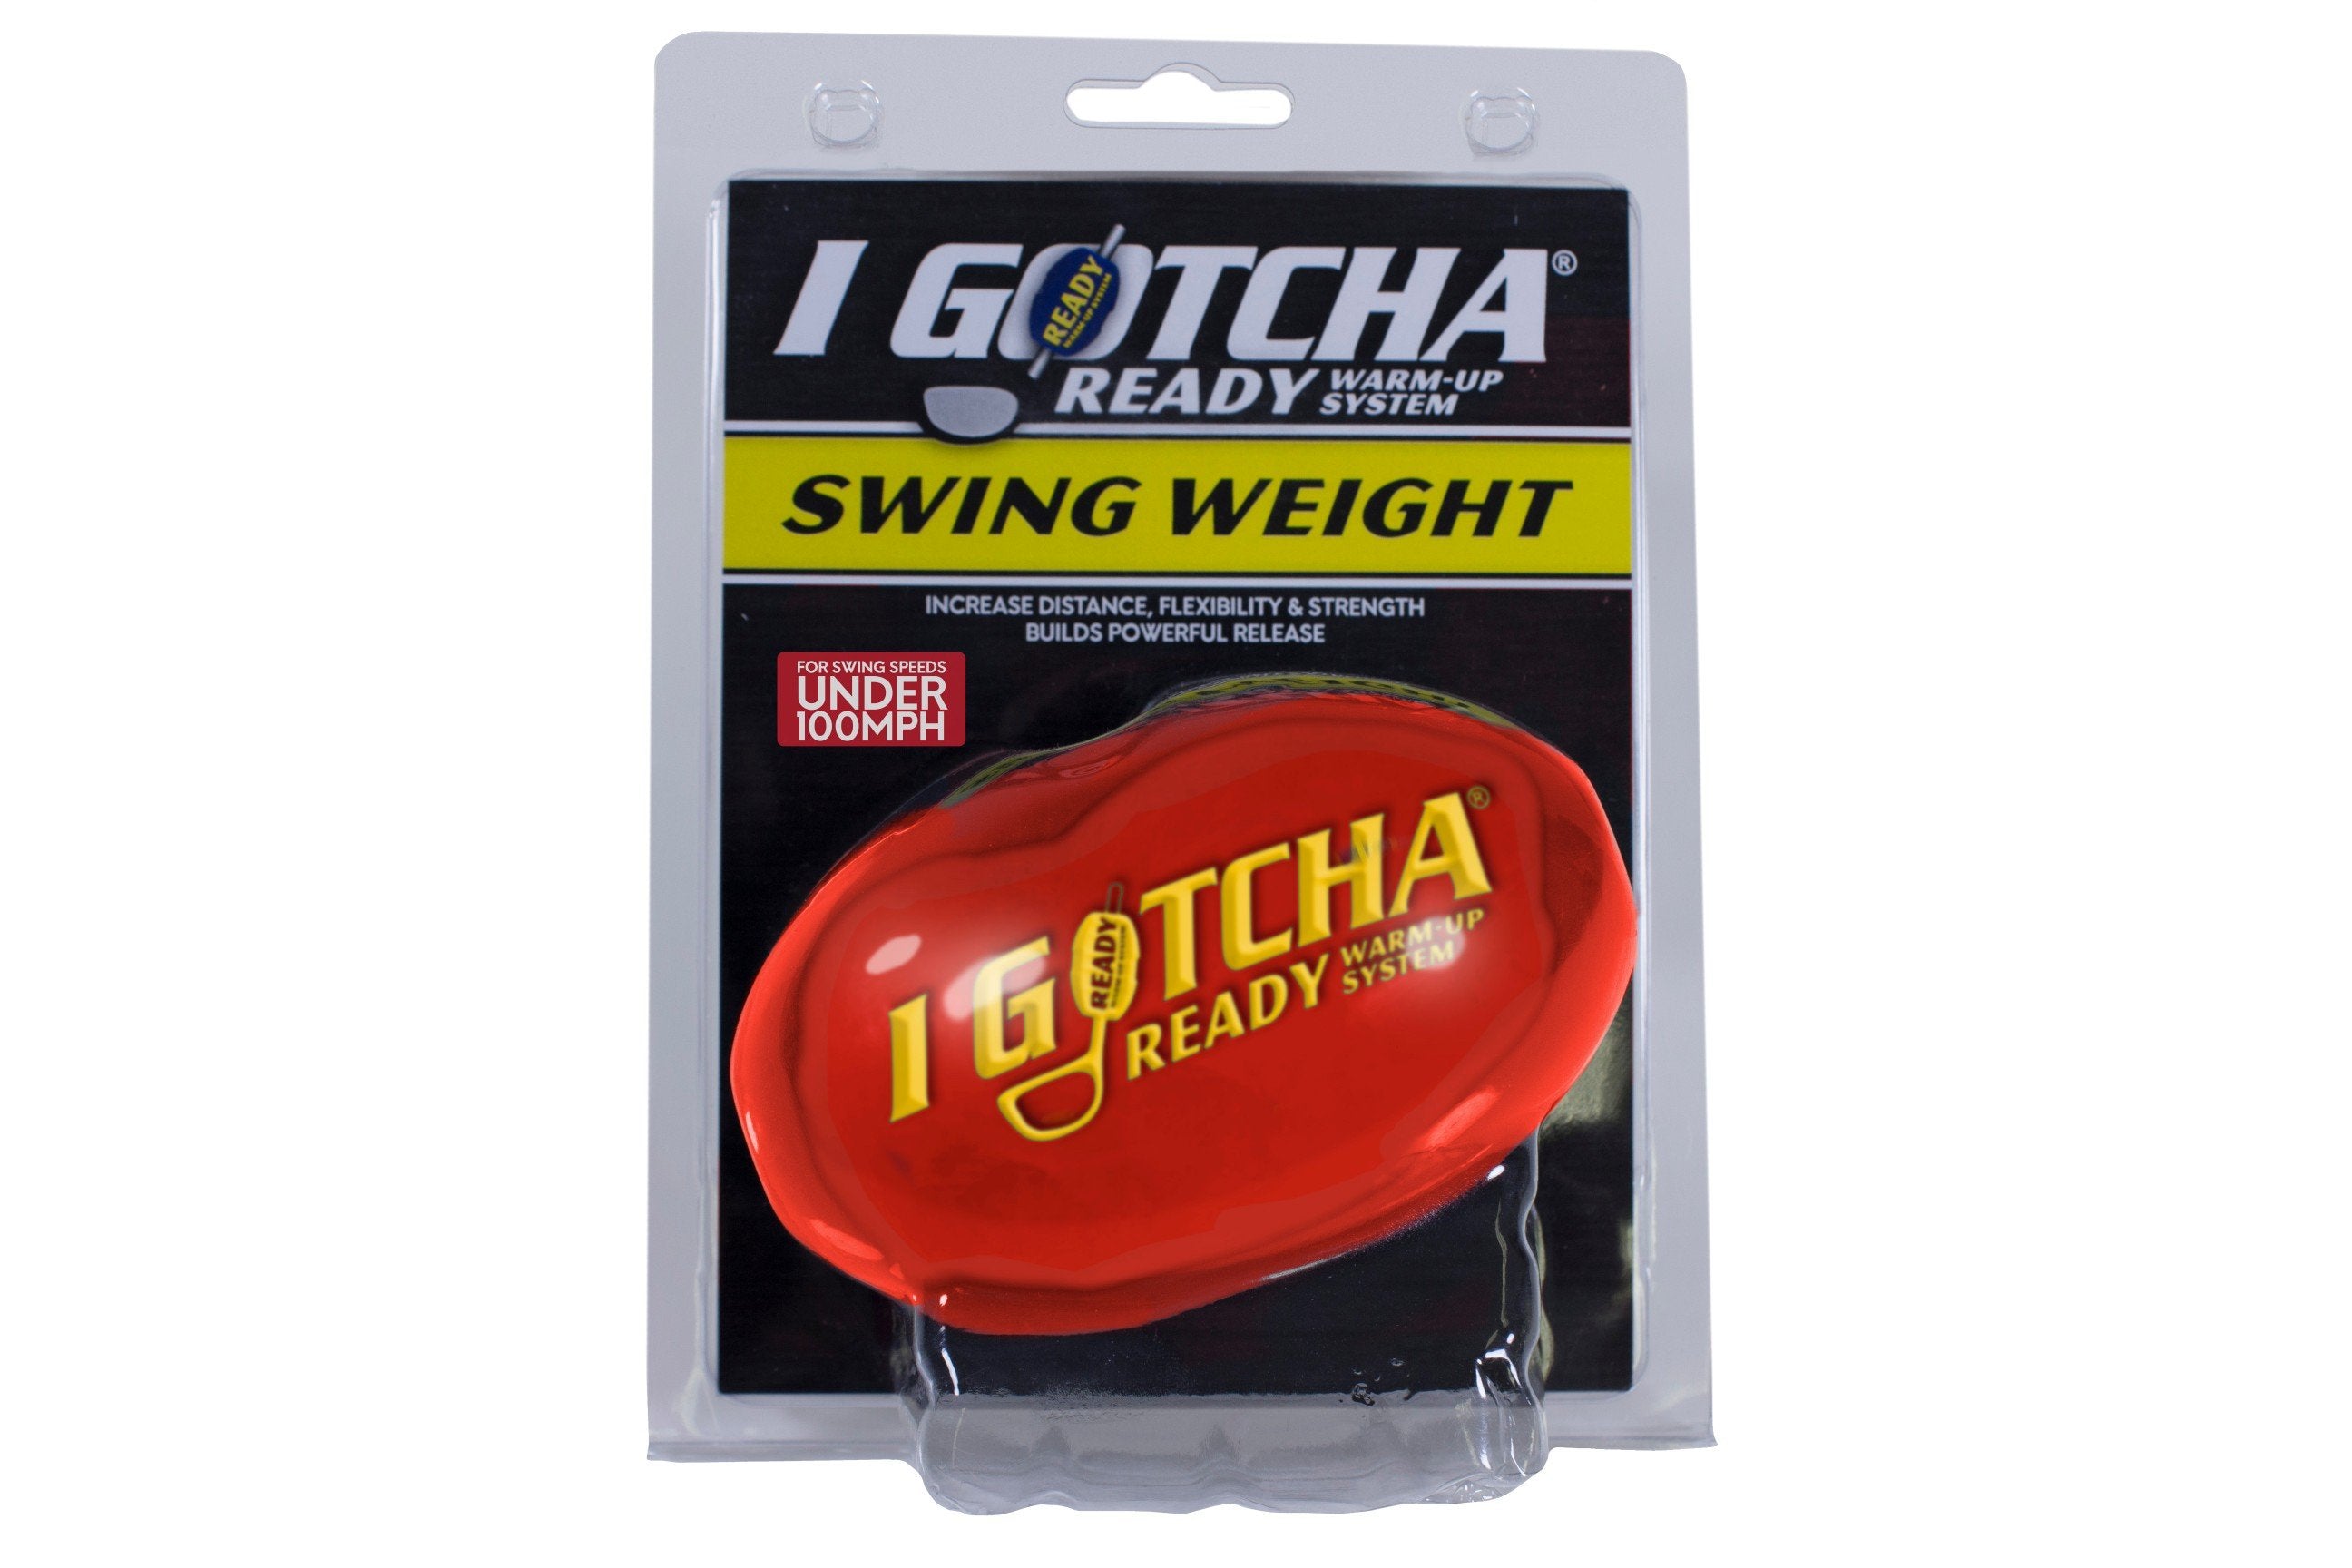 IGOTCHA Ready Warm-Up Swing Weight